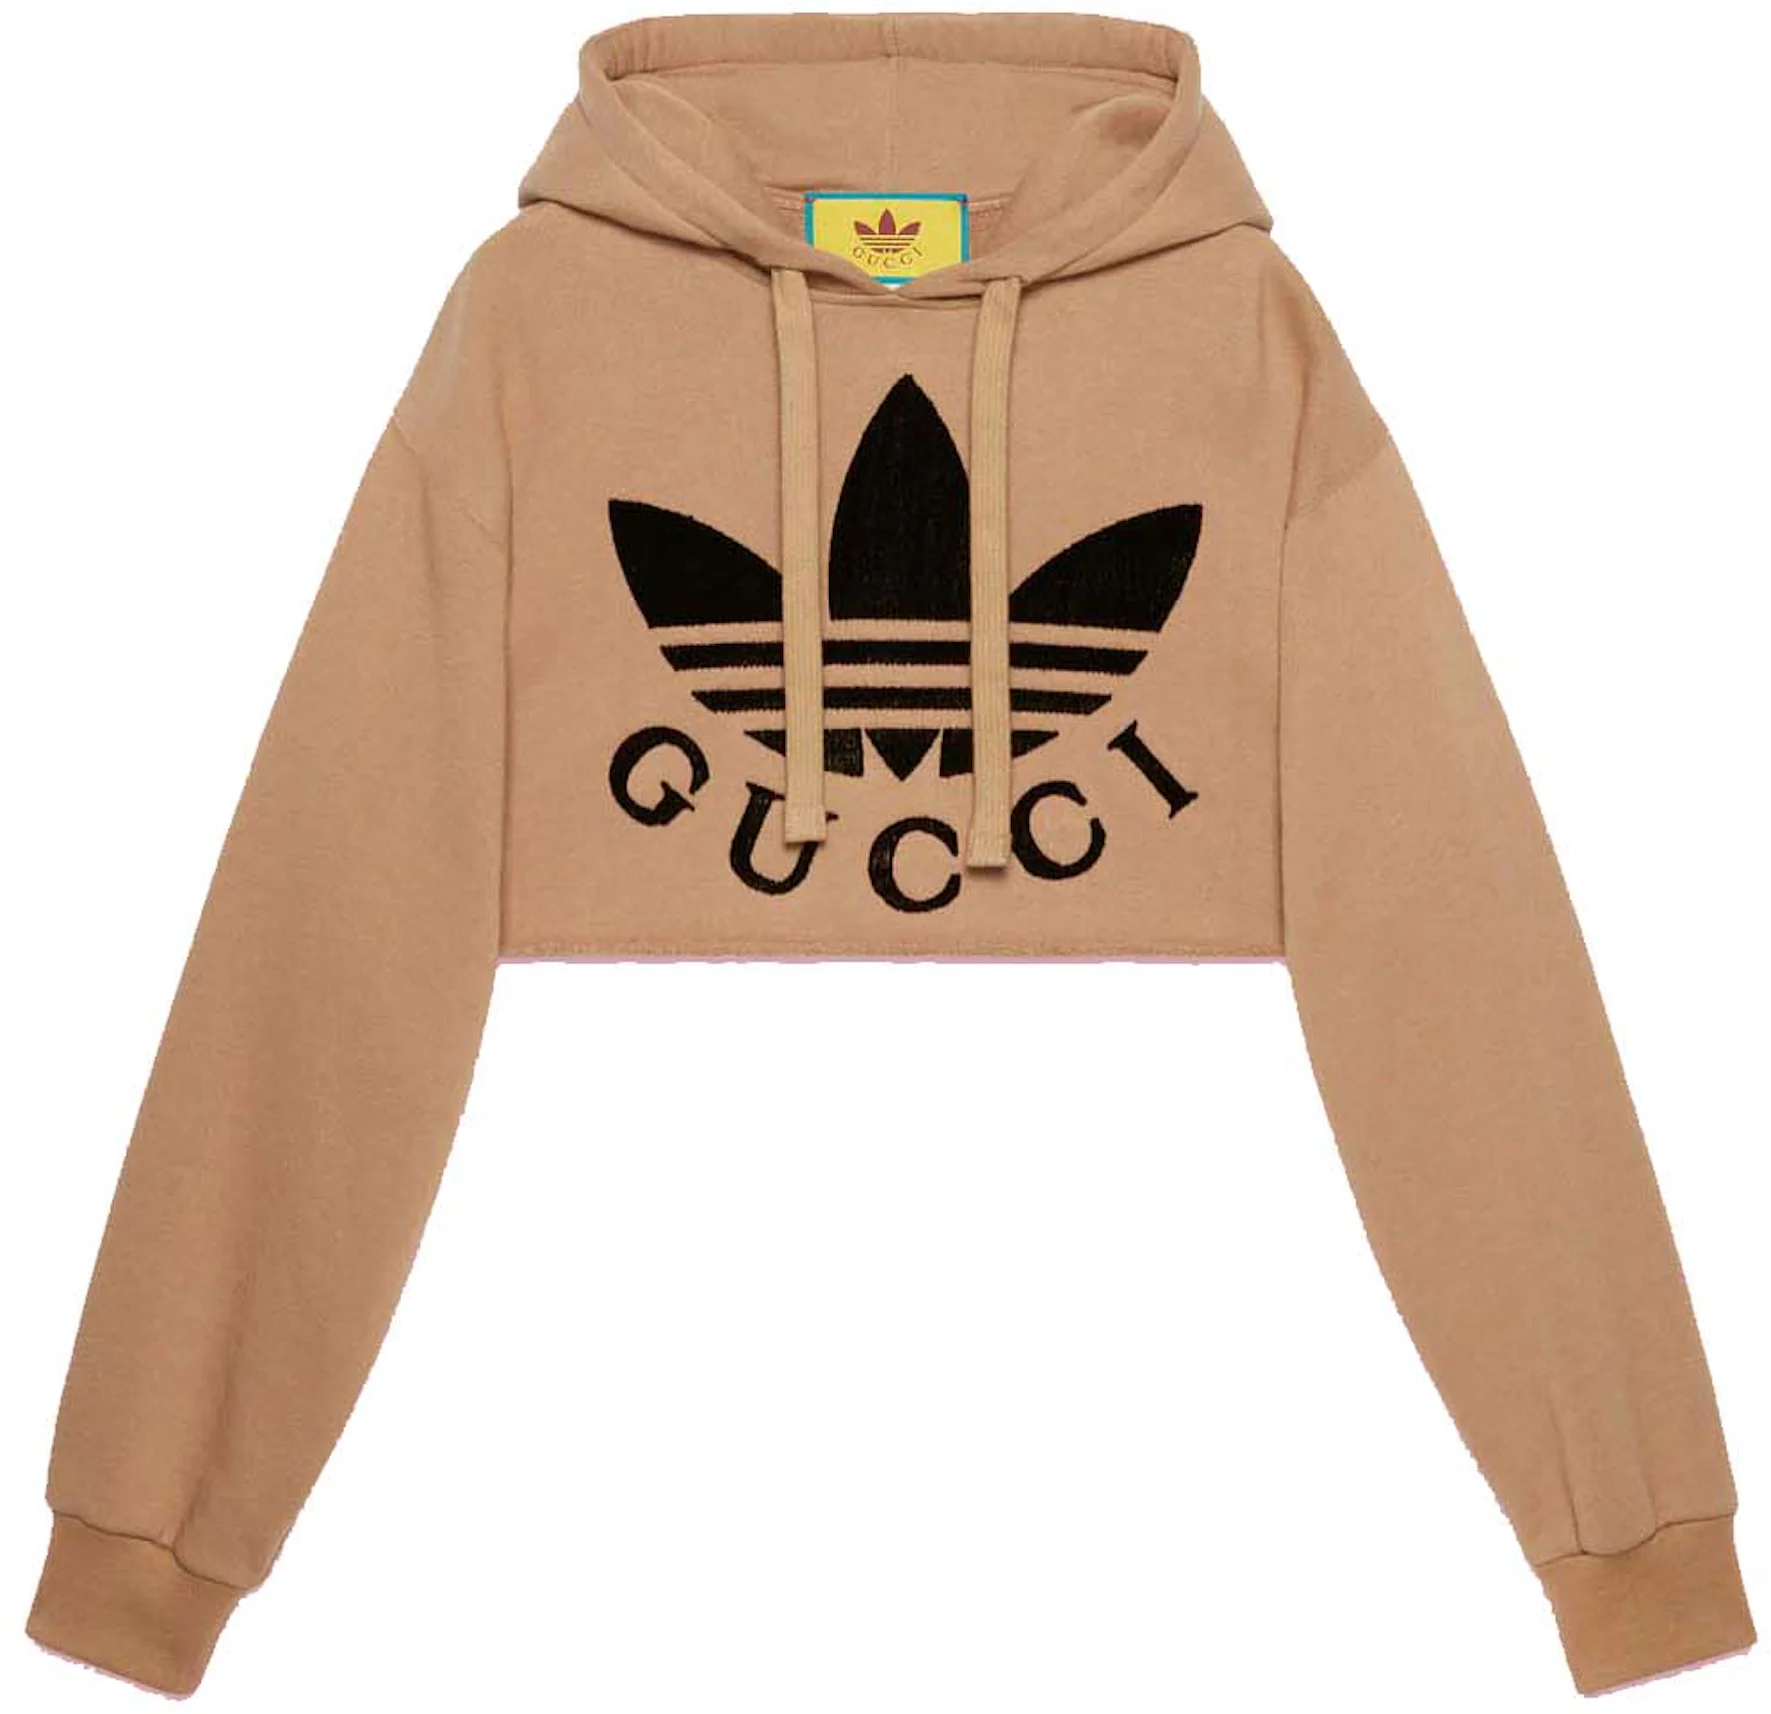 Gucci x adidas Cropped Sweatshirt Beige - SS22 - US